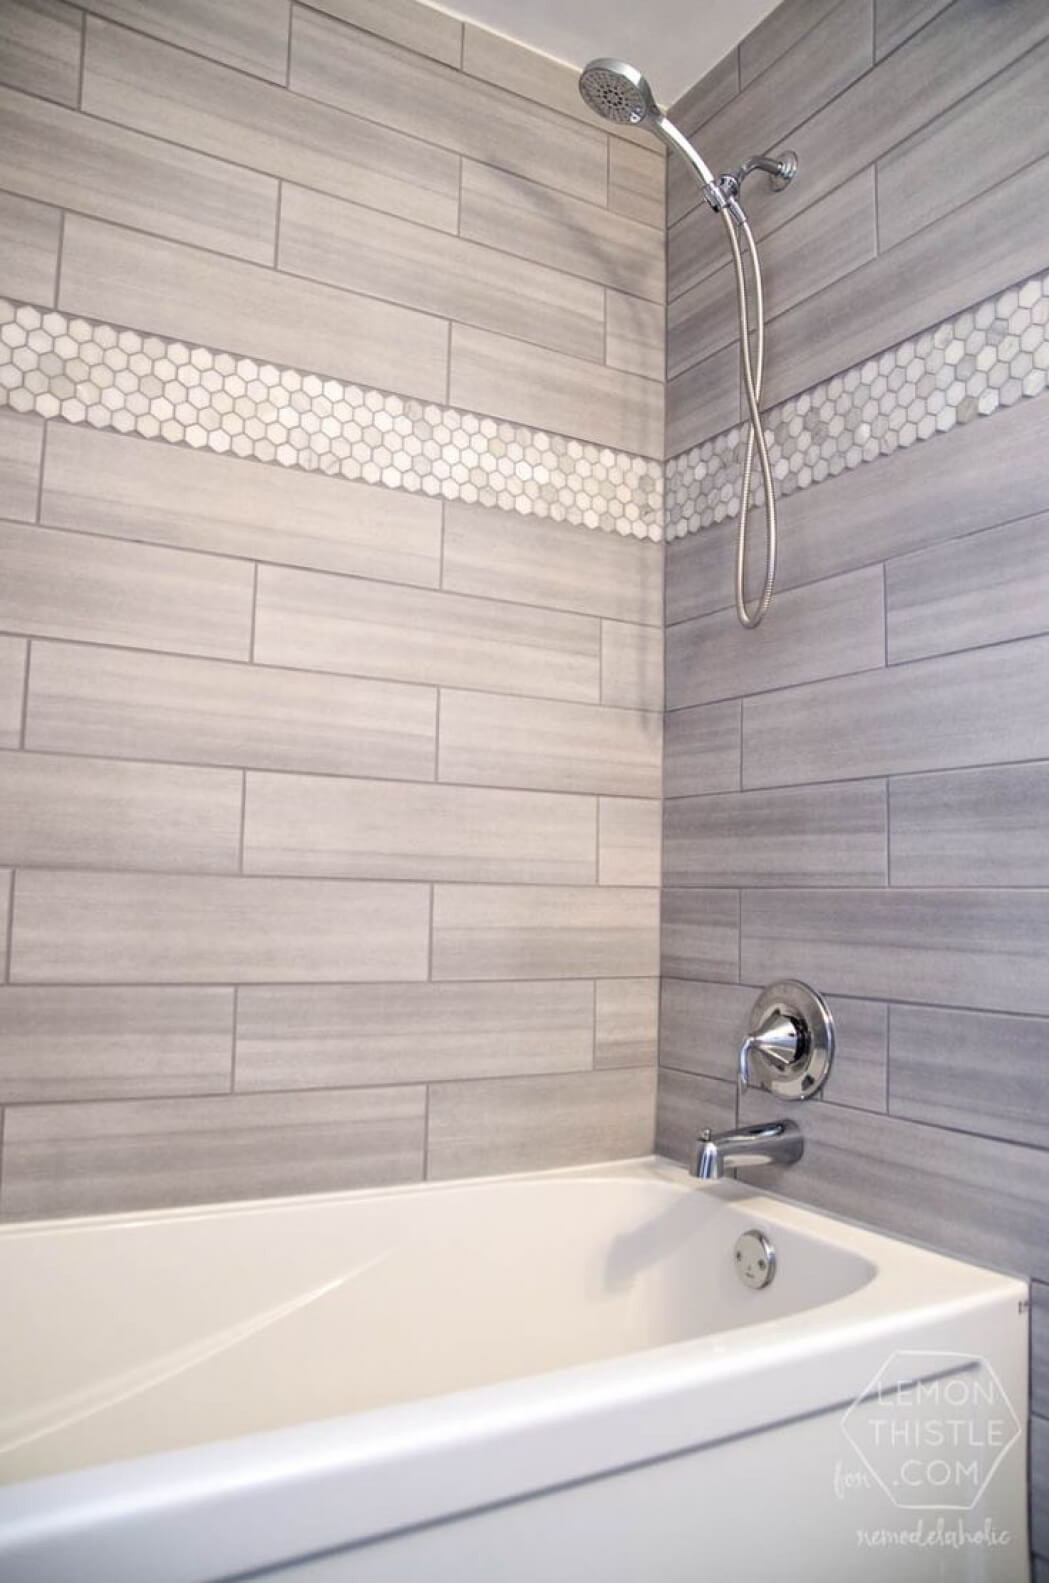 Best Tile for Bathroom Shower Unique 32 Best Shower Tile Ideas and Designs for 2020